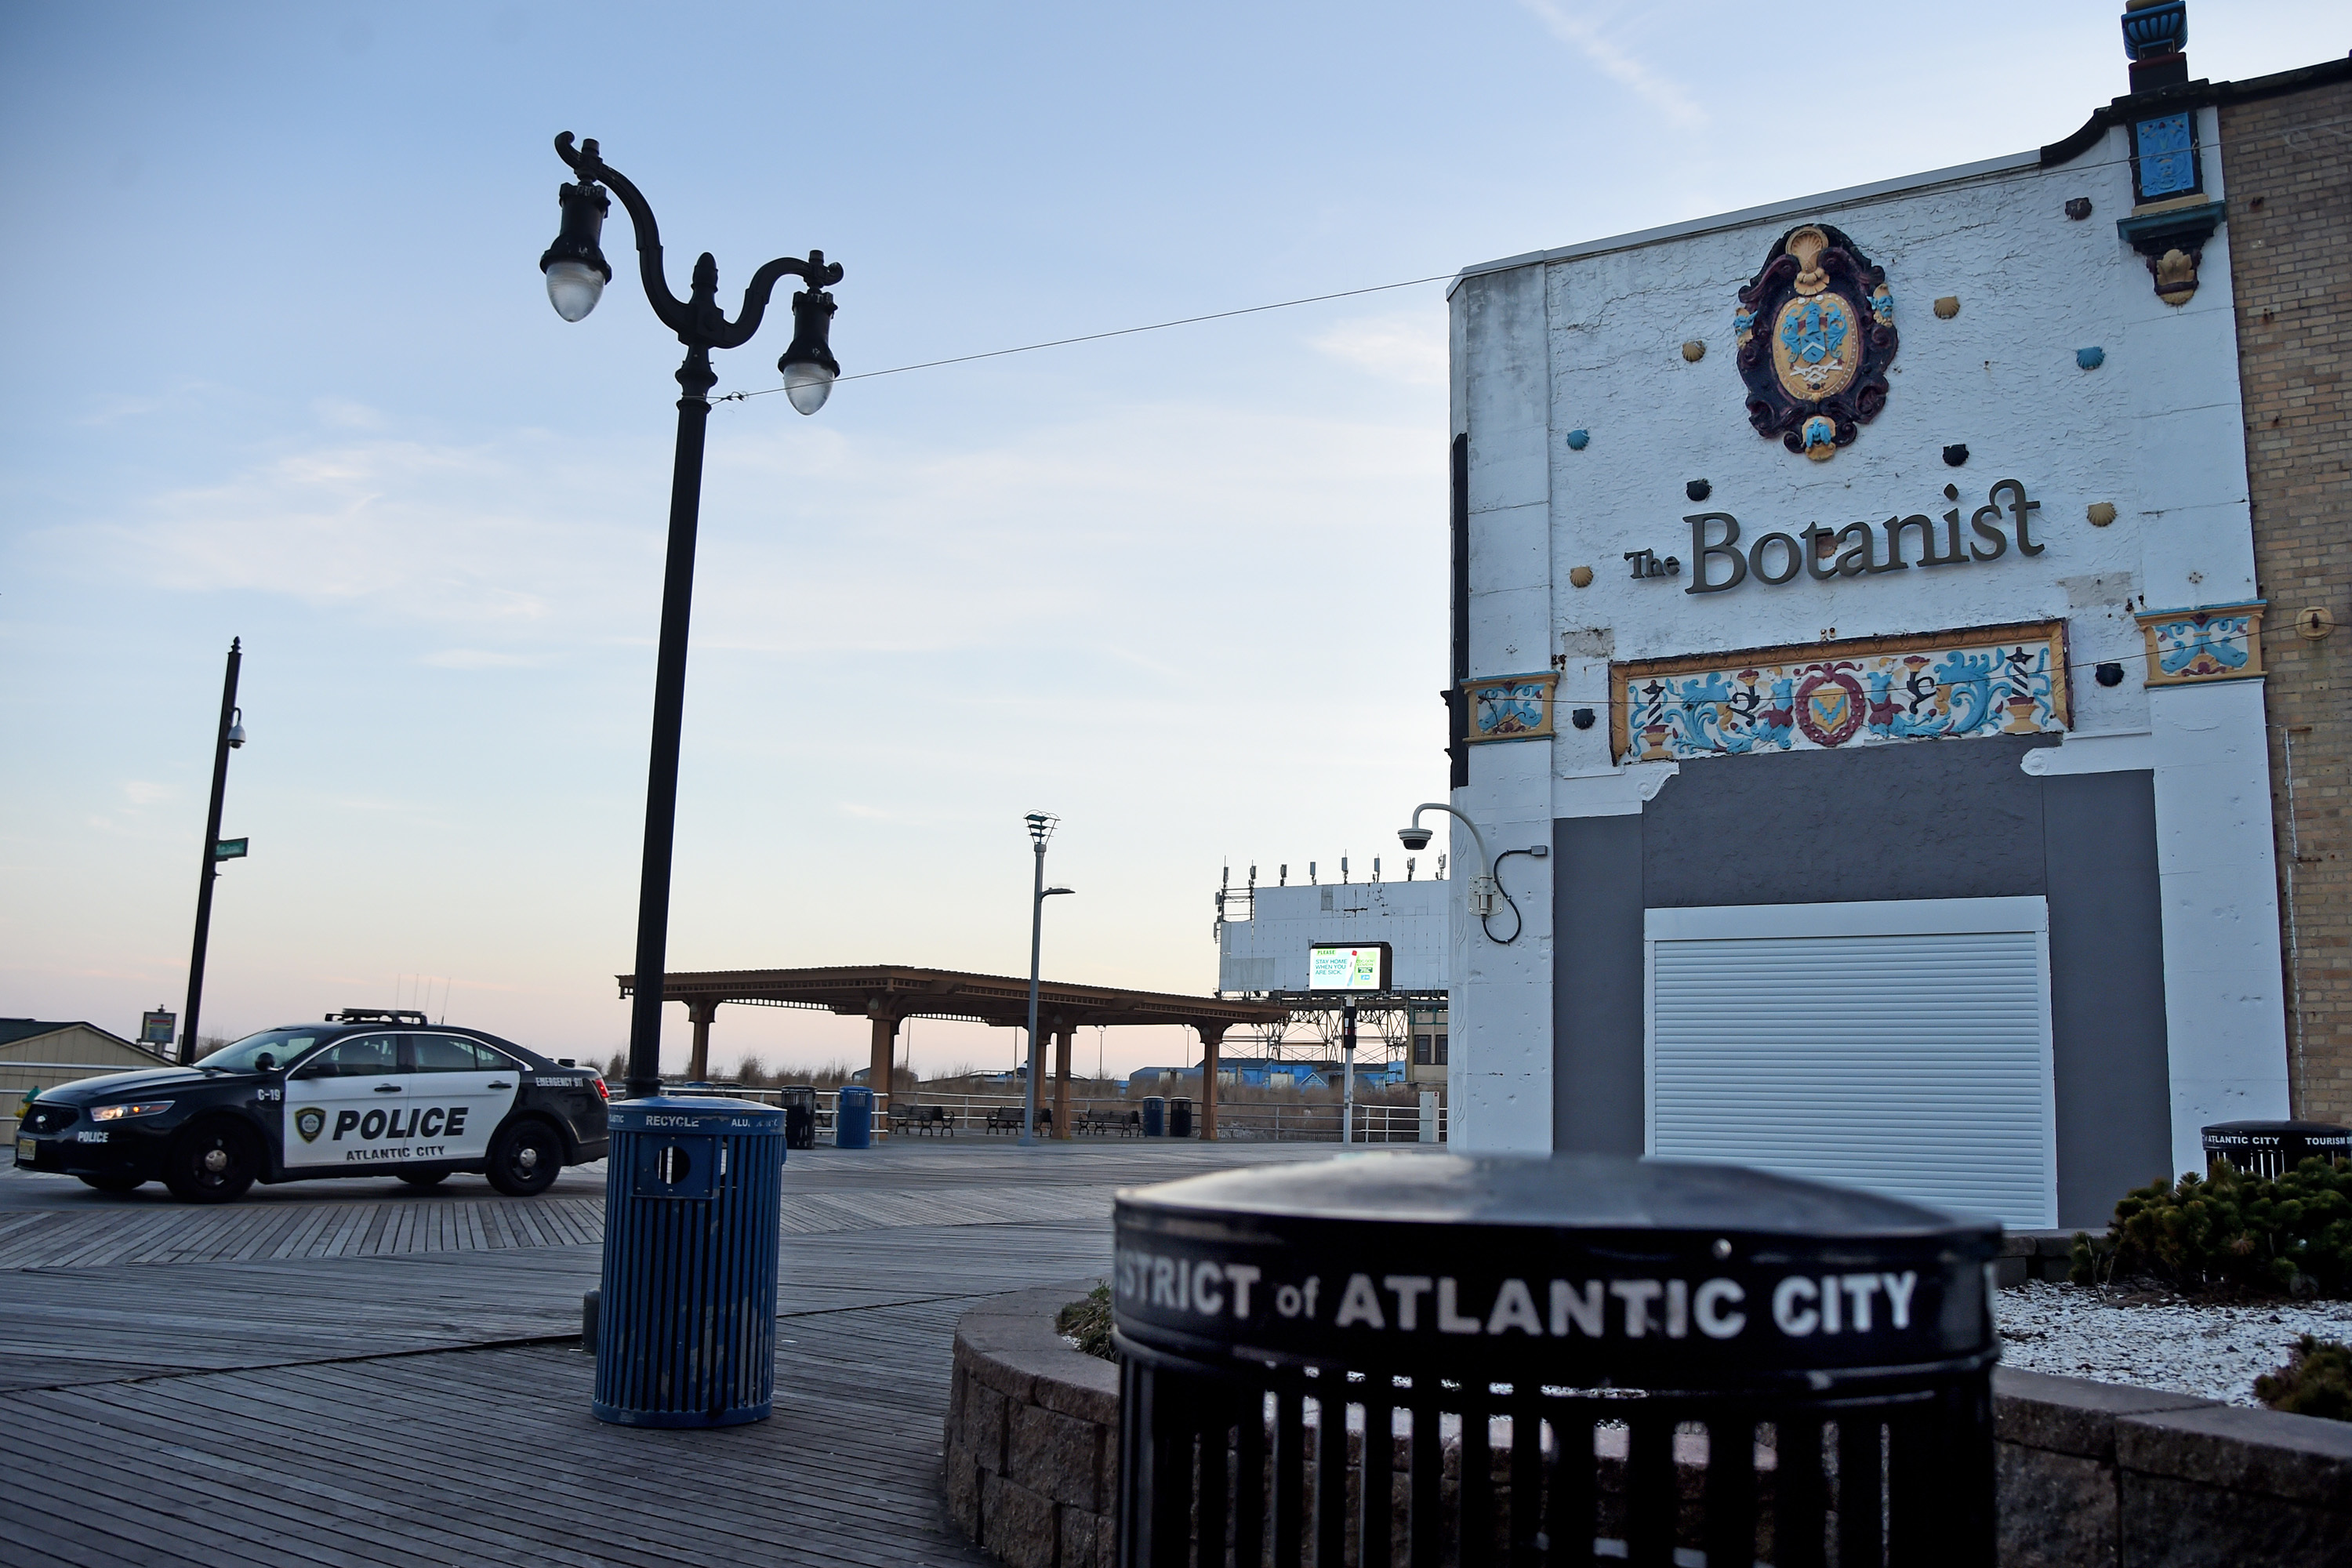 New legislation allows drinking on Atlantic City streets